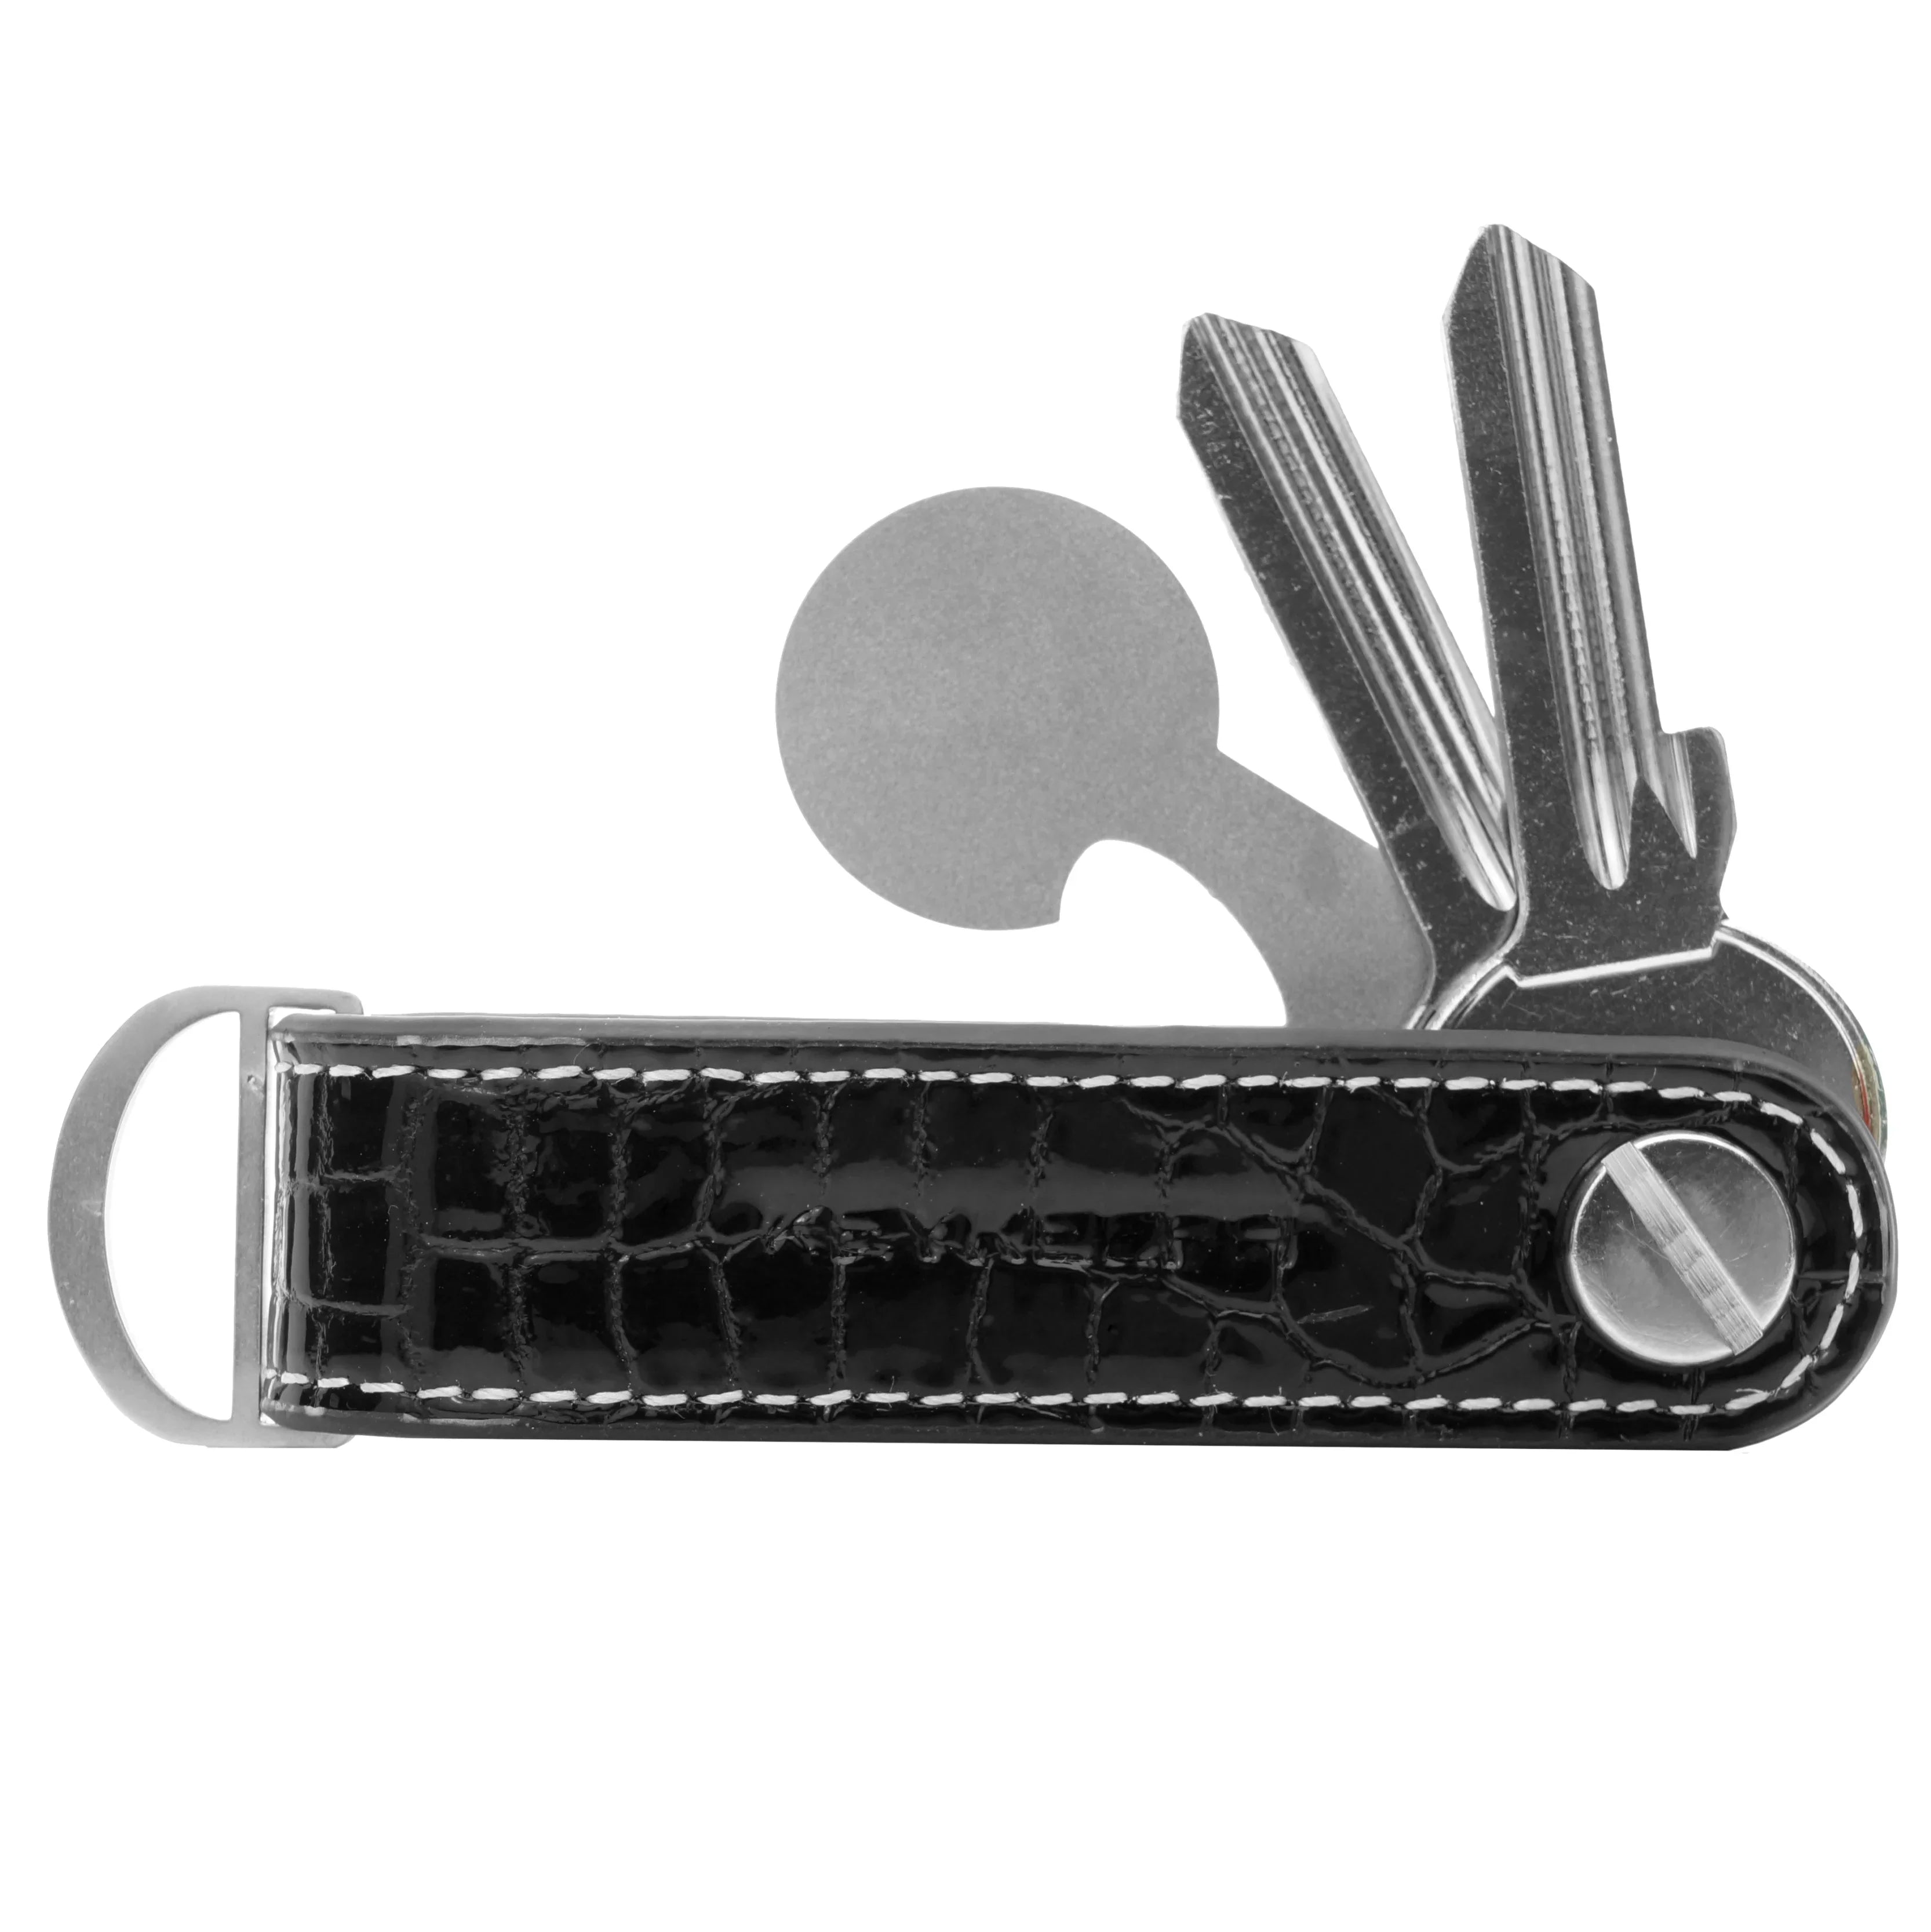 Keykeepa Loop Exclusive Key Organizer - cayman black